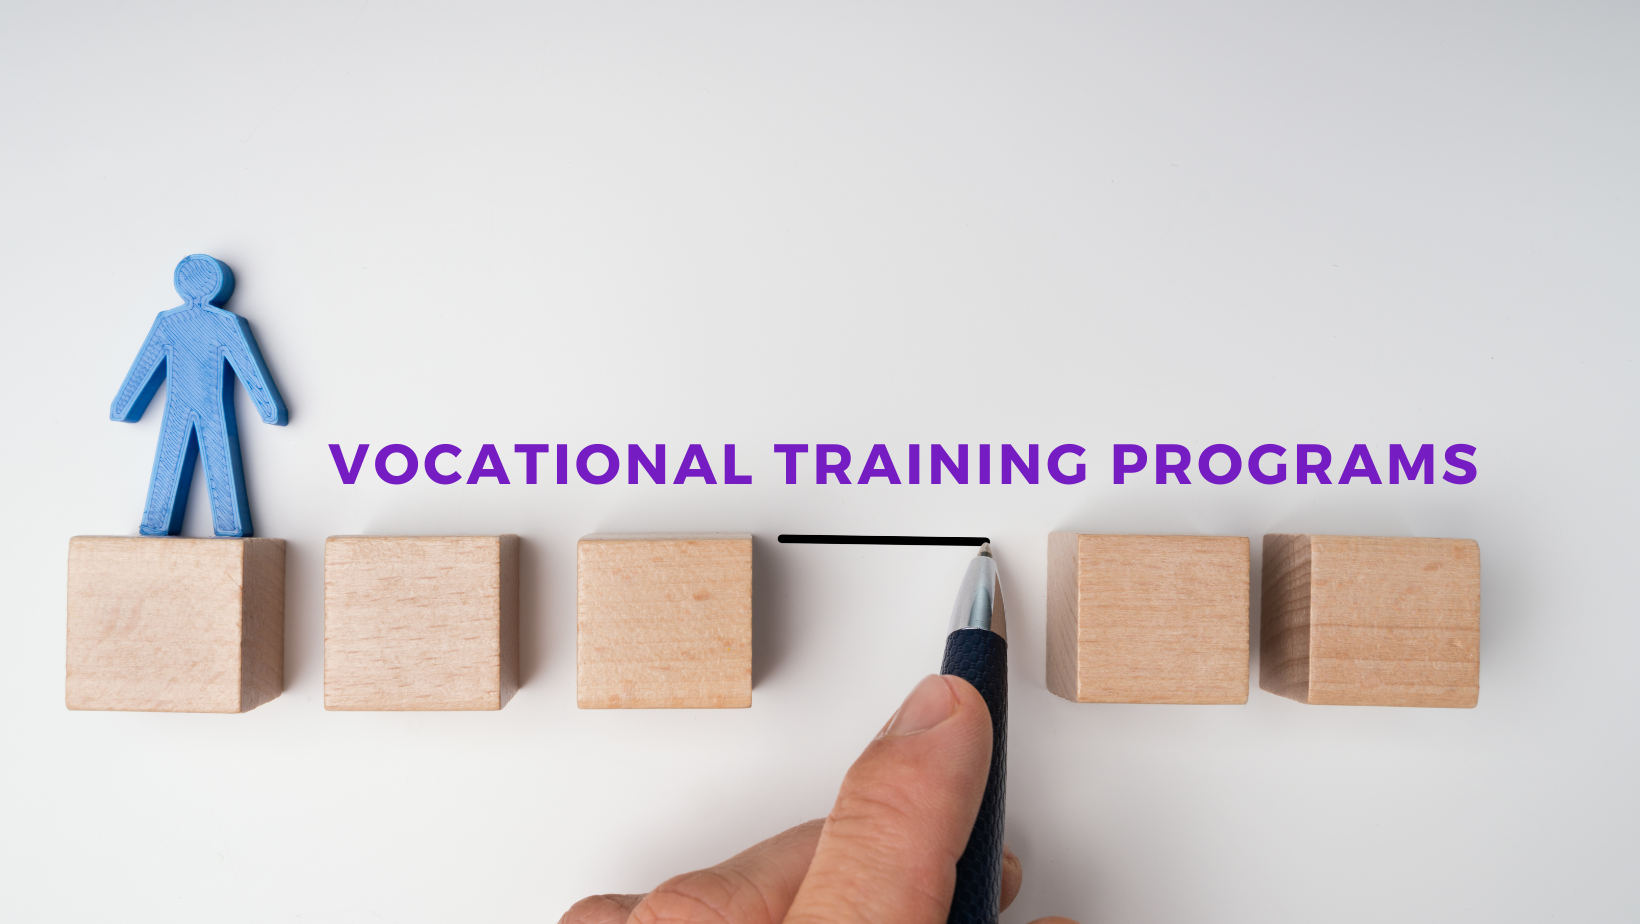 Benefits of Vocational Training Programs